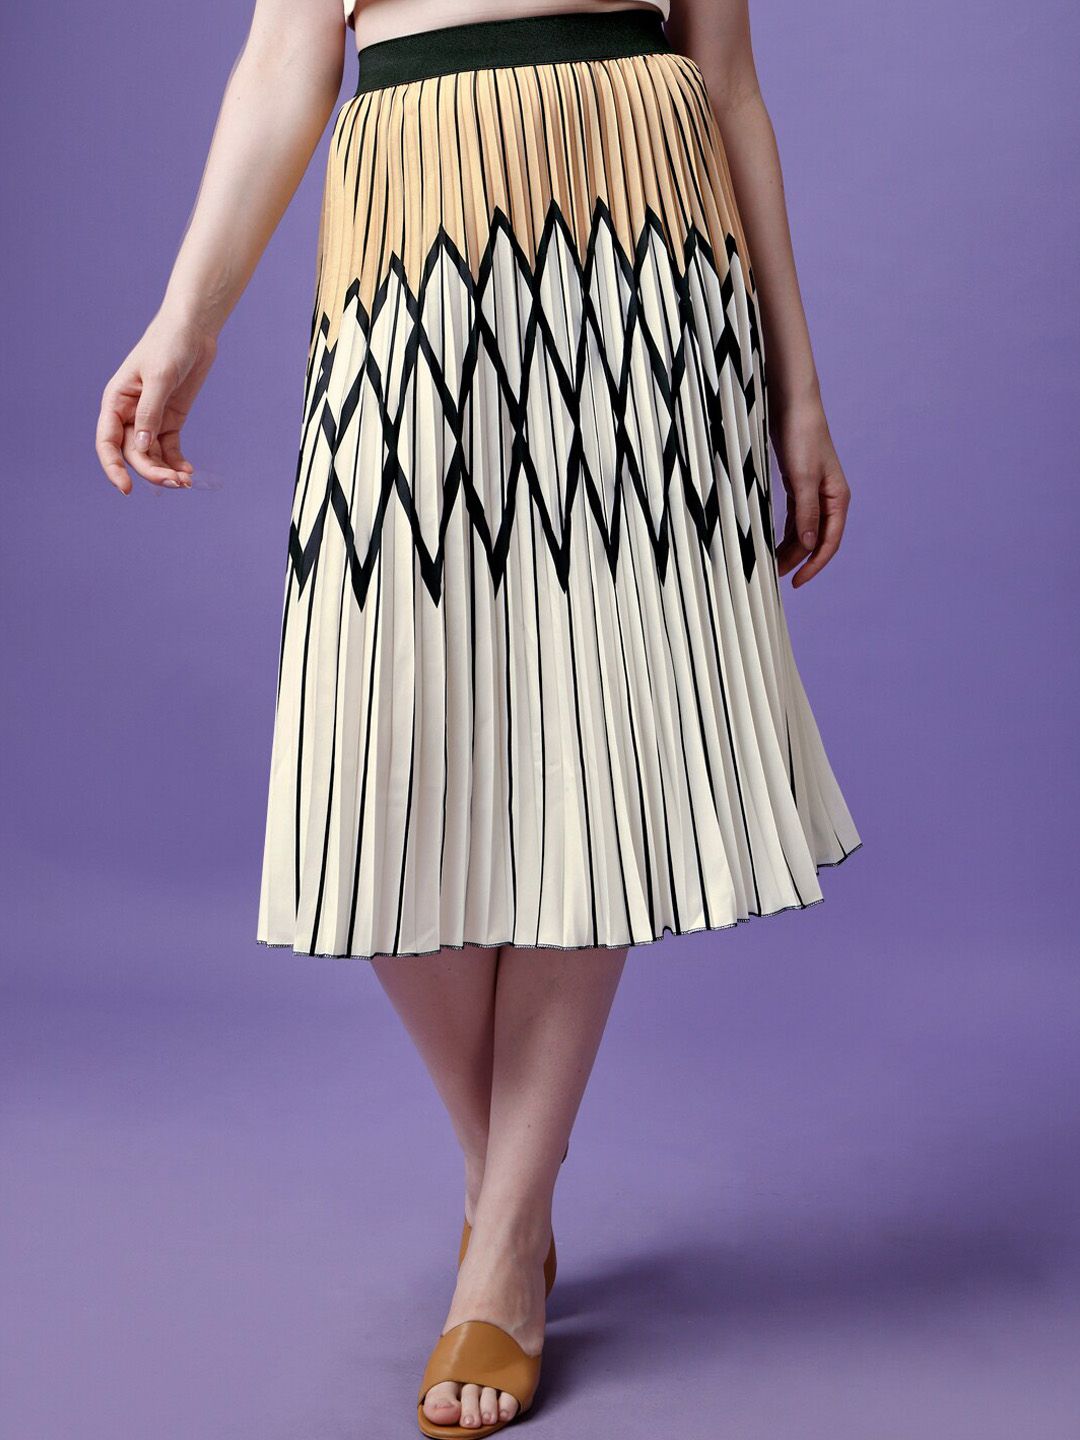 DEKLOOK Geometric Printed Pleated Flared Midi Skirt Price in India